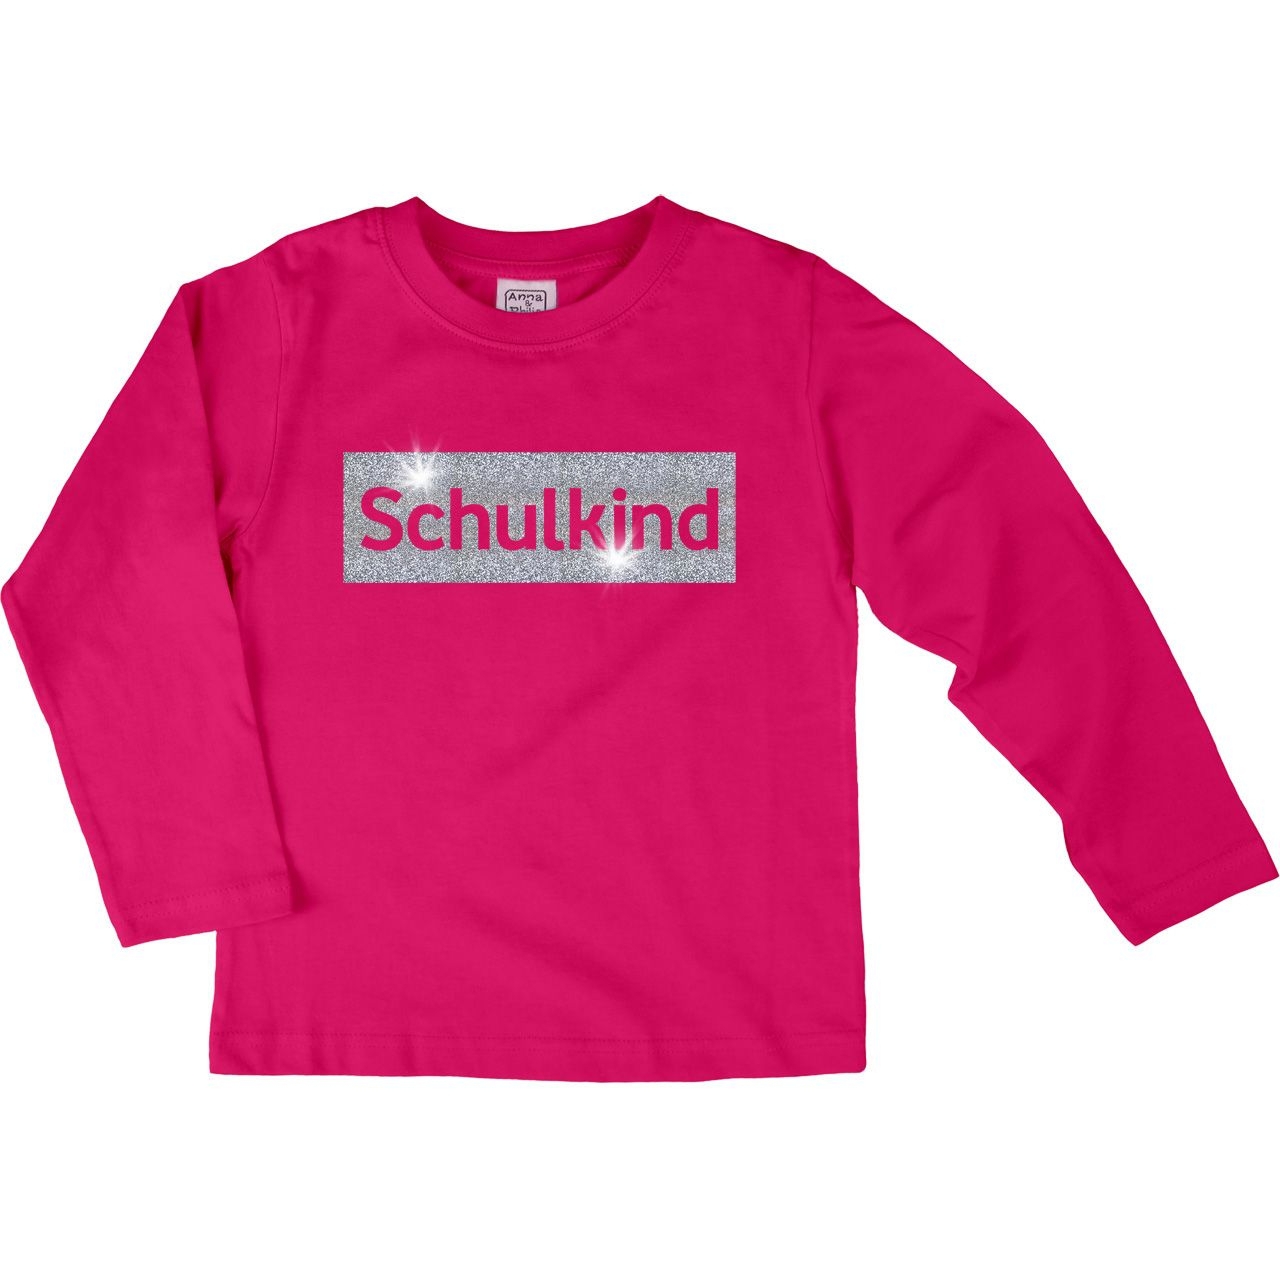 Schulkind Glitzer Kinder Langarm Shirt pink 122 / 128